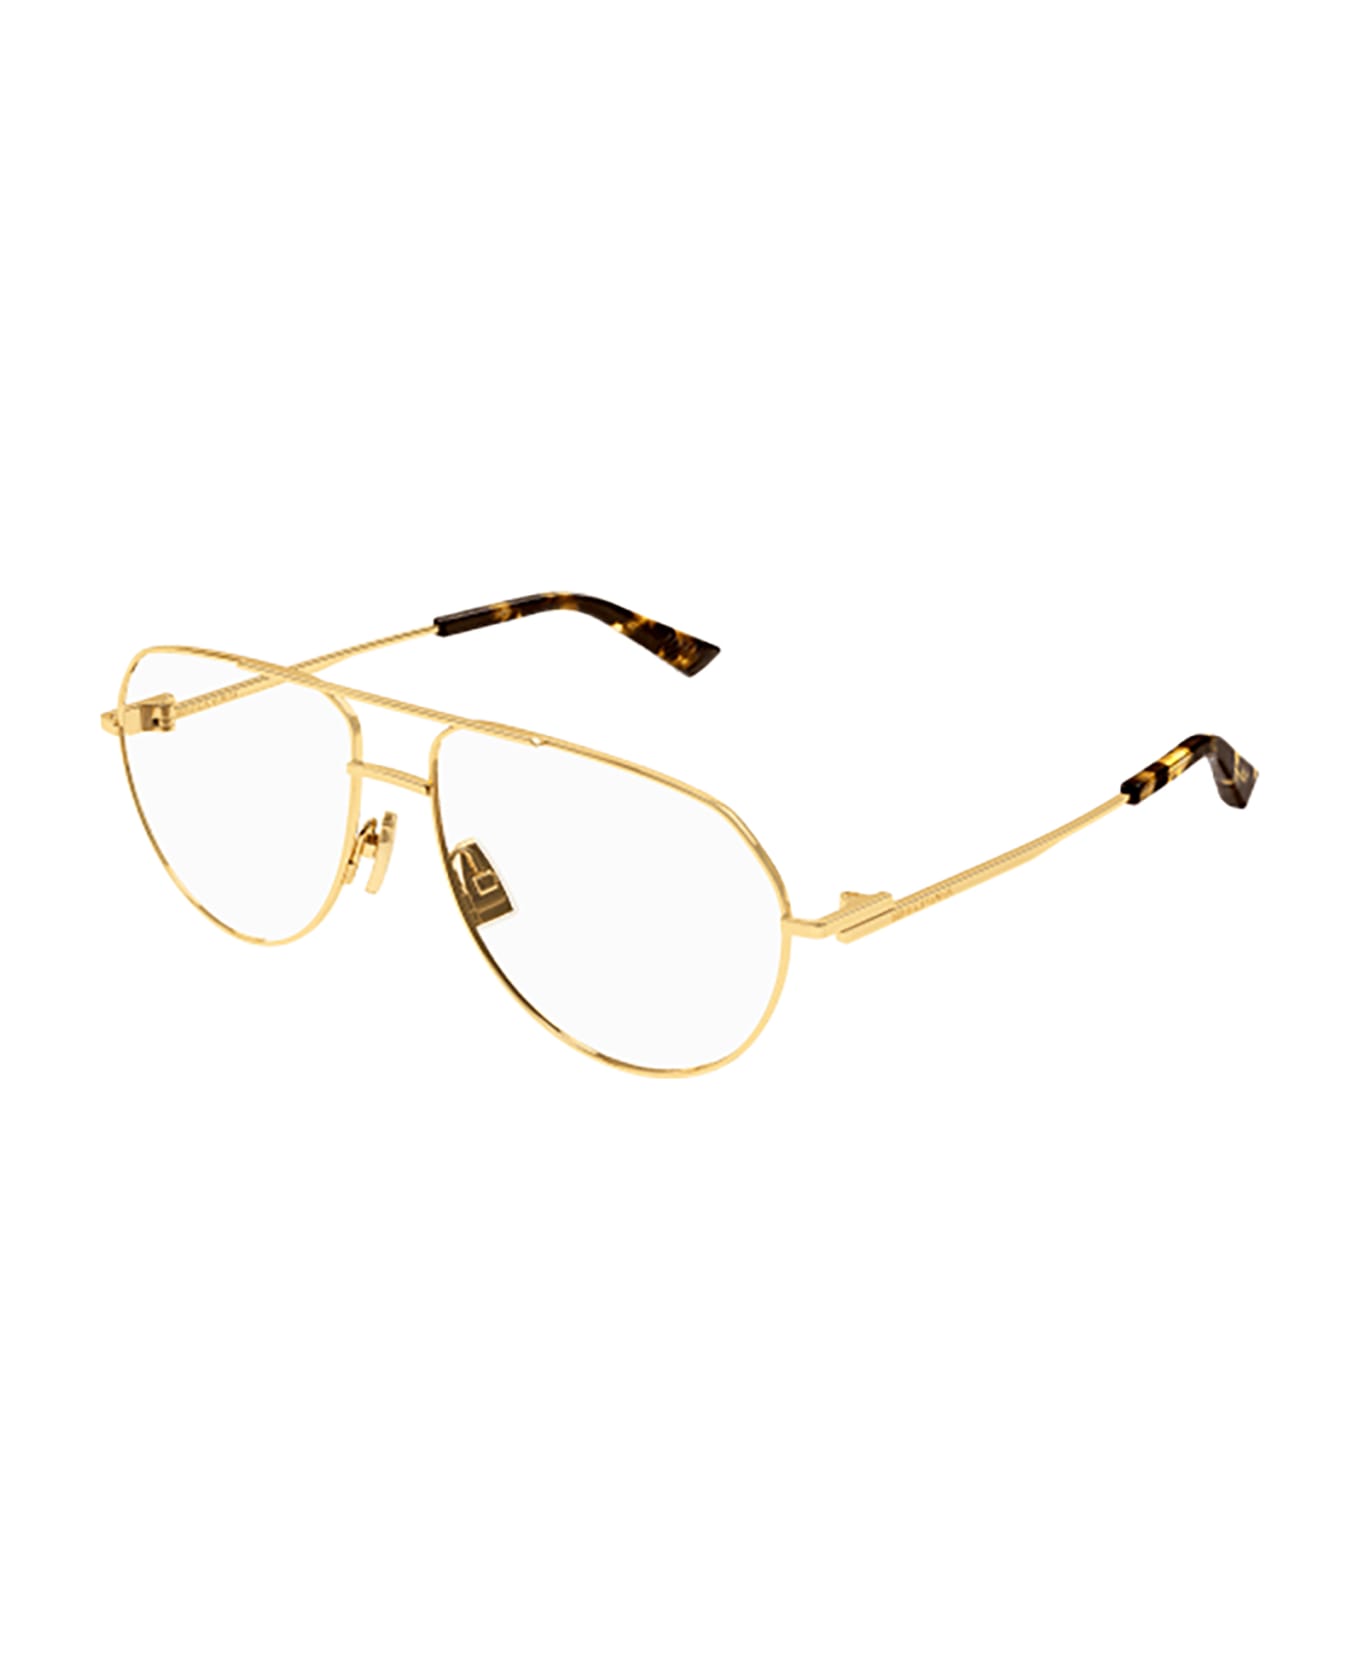 Bottega Veneta Eyewear Bv1302o Glasses - 001 gold gold transparent